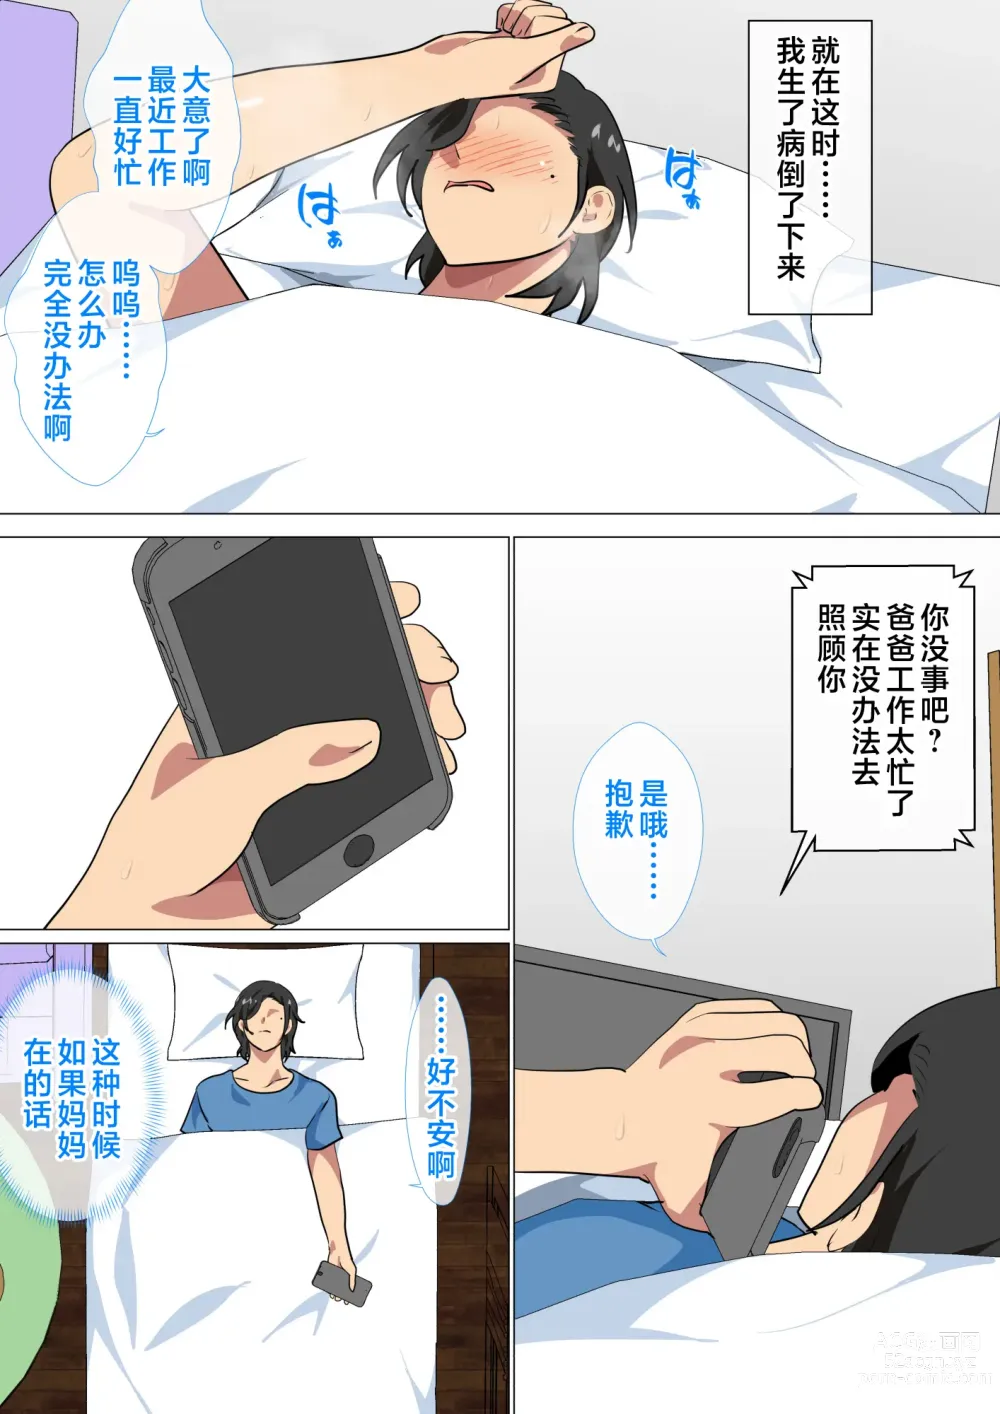 Page 5 of doujinshi 向母亲告白之后获得了仅有一天做爱的机会2